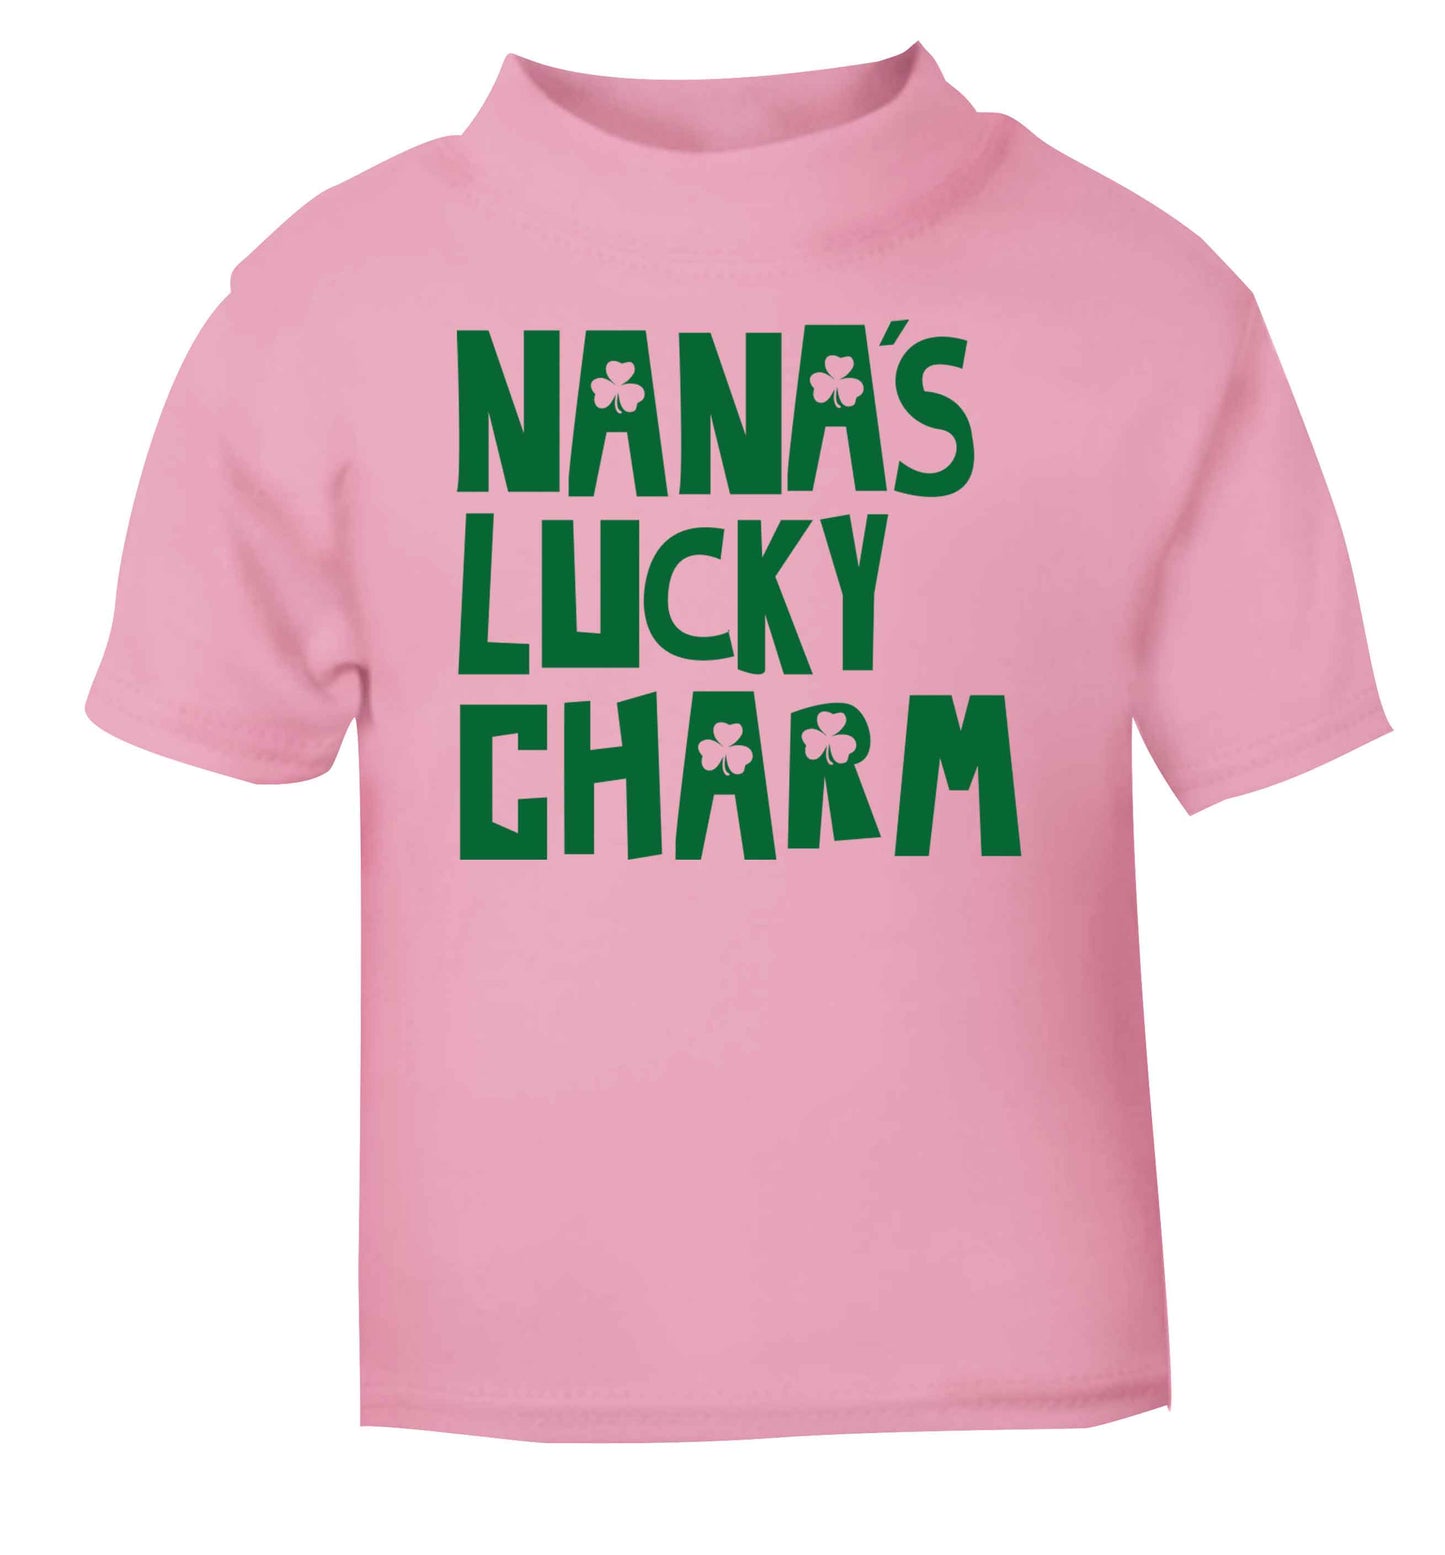 Nana's lucky charm light pink baby toddler Tshirt 2 Years